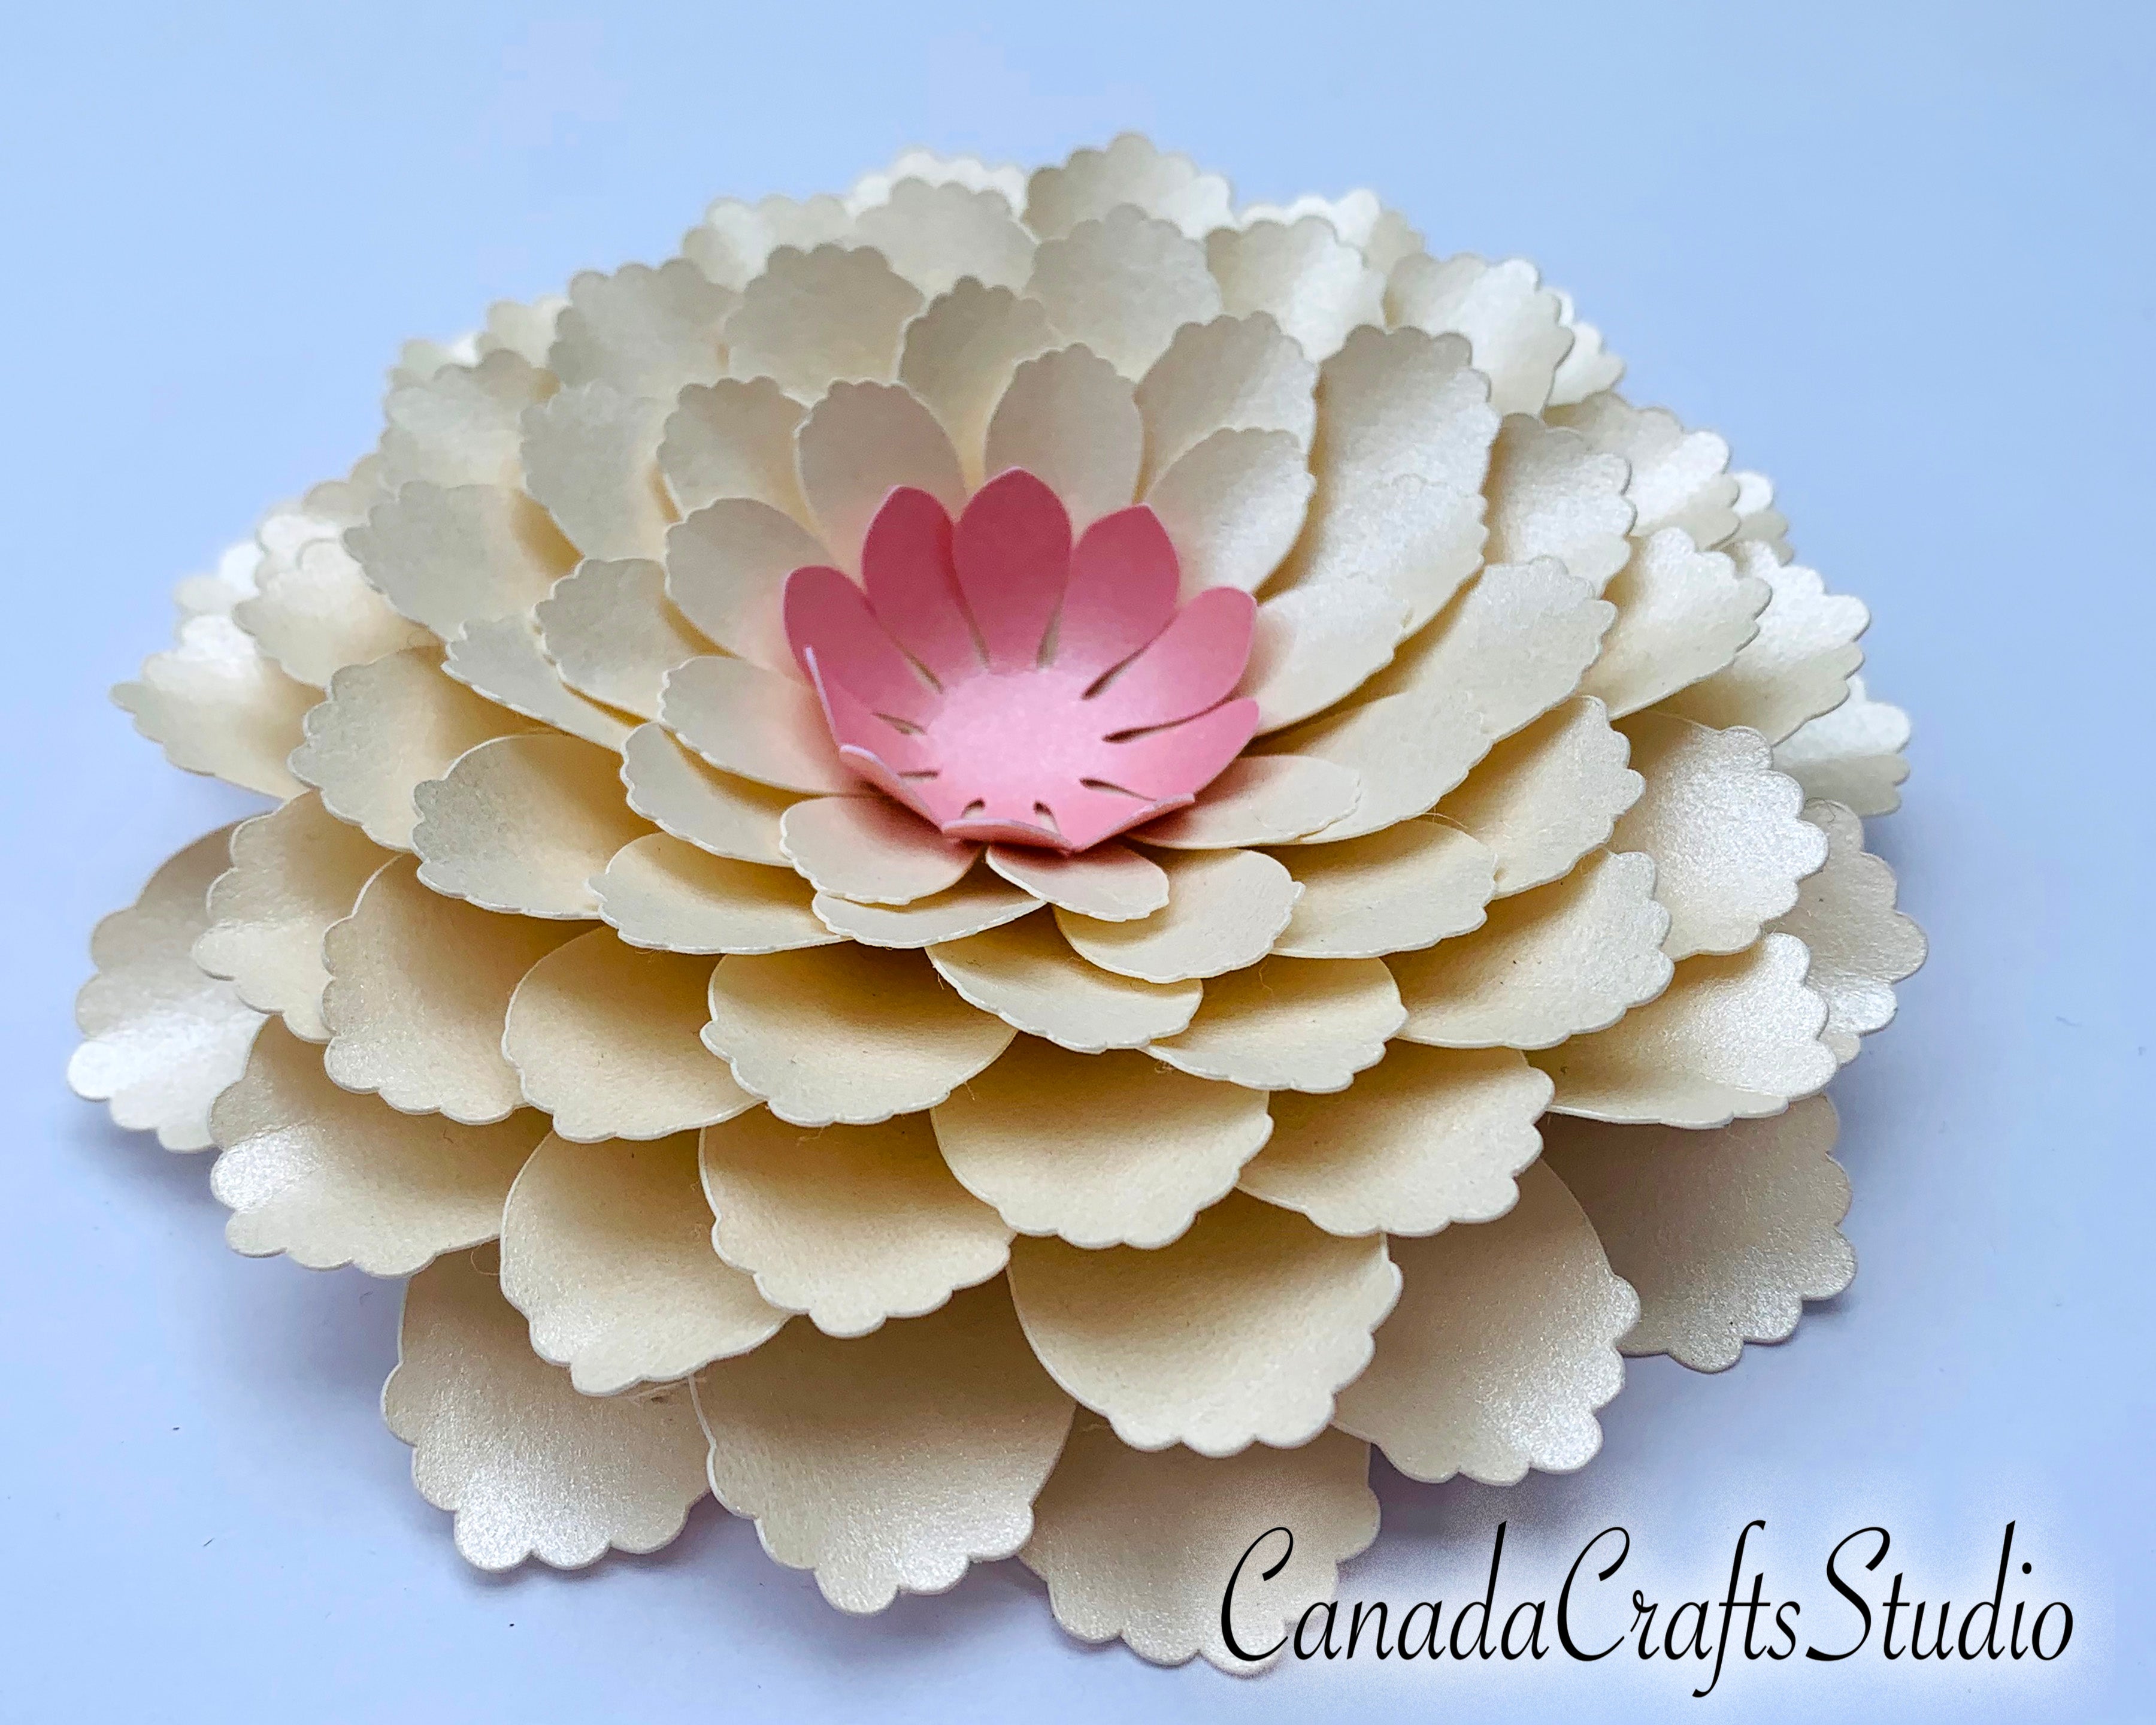 Paper Flower SVG Template #9